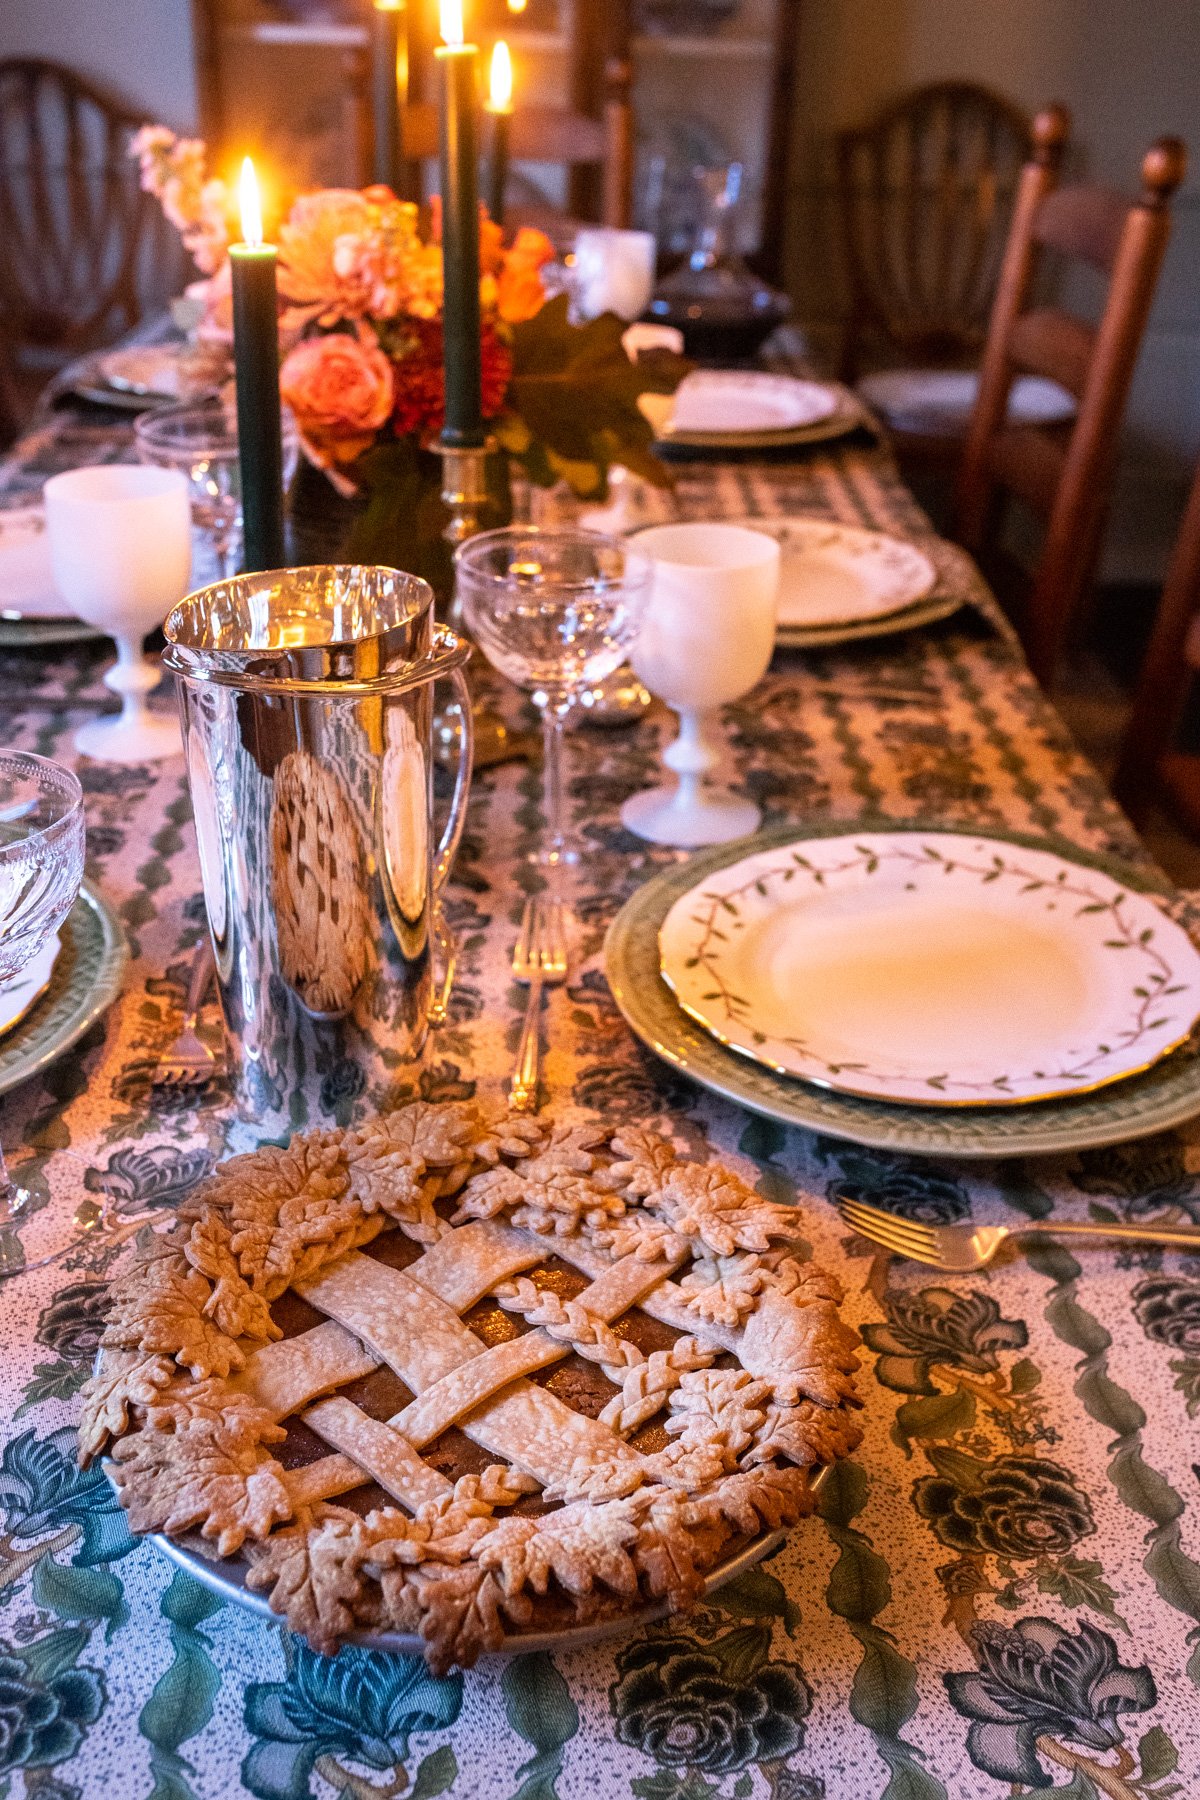 Stacie Flinner x Thanksgiving Table Herend Rothschild Garden-35.jpg